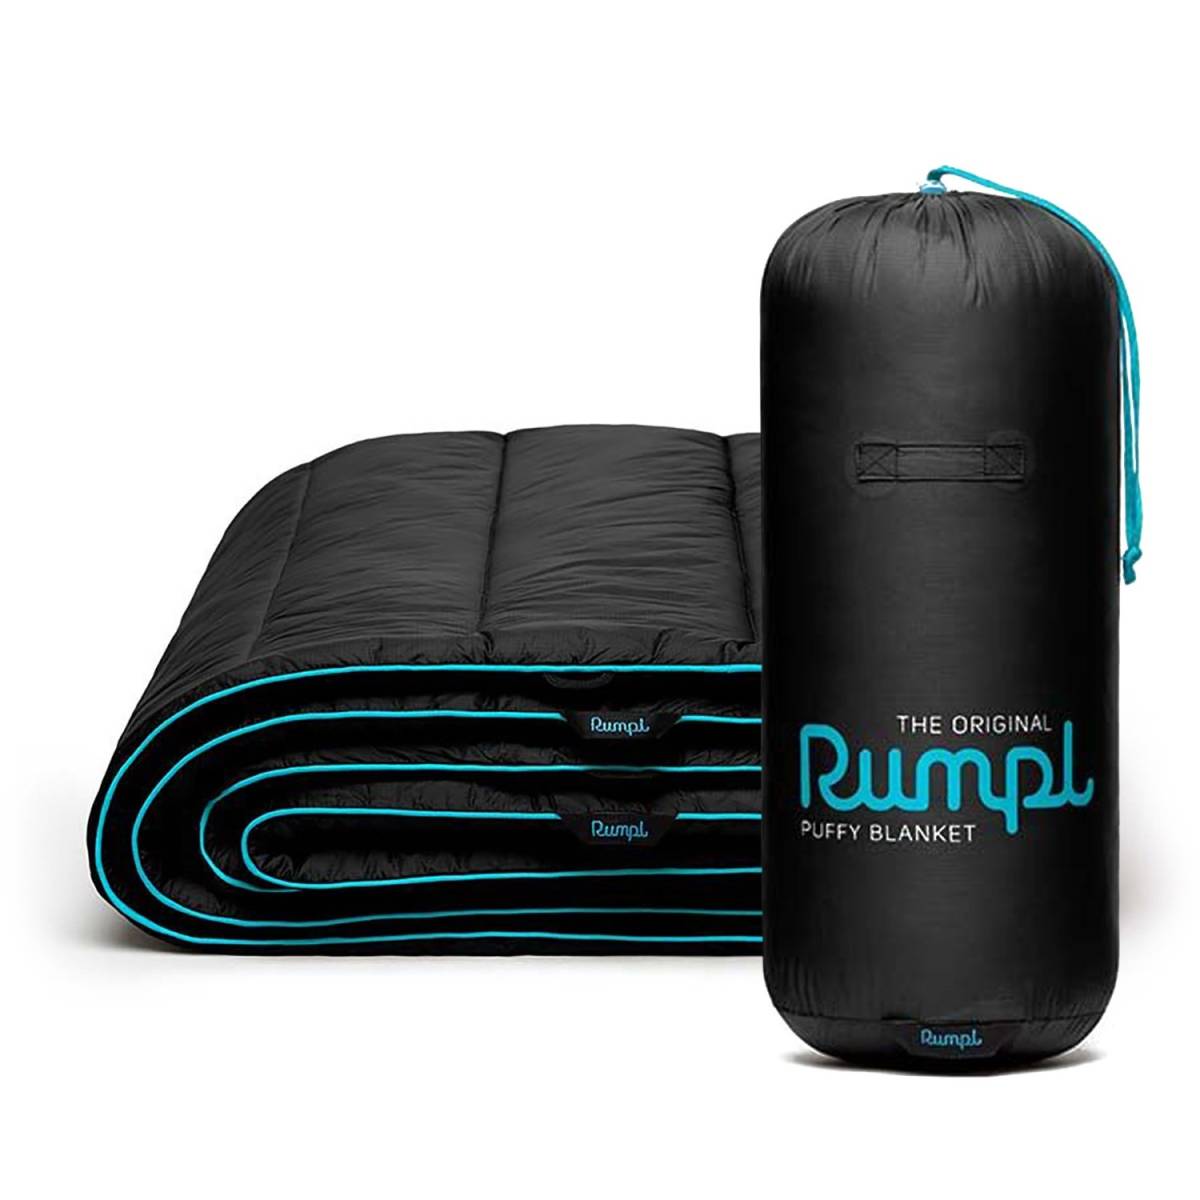 RUMPL ランプル★The Original Printed Puffy Blanket 1-Person Black/Cyan 高品質 アウトドア ブランケット